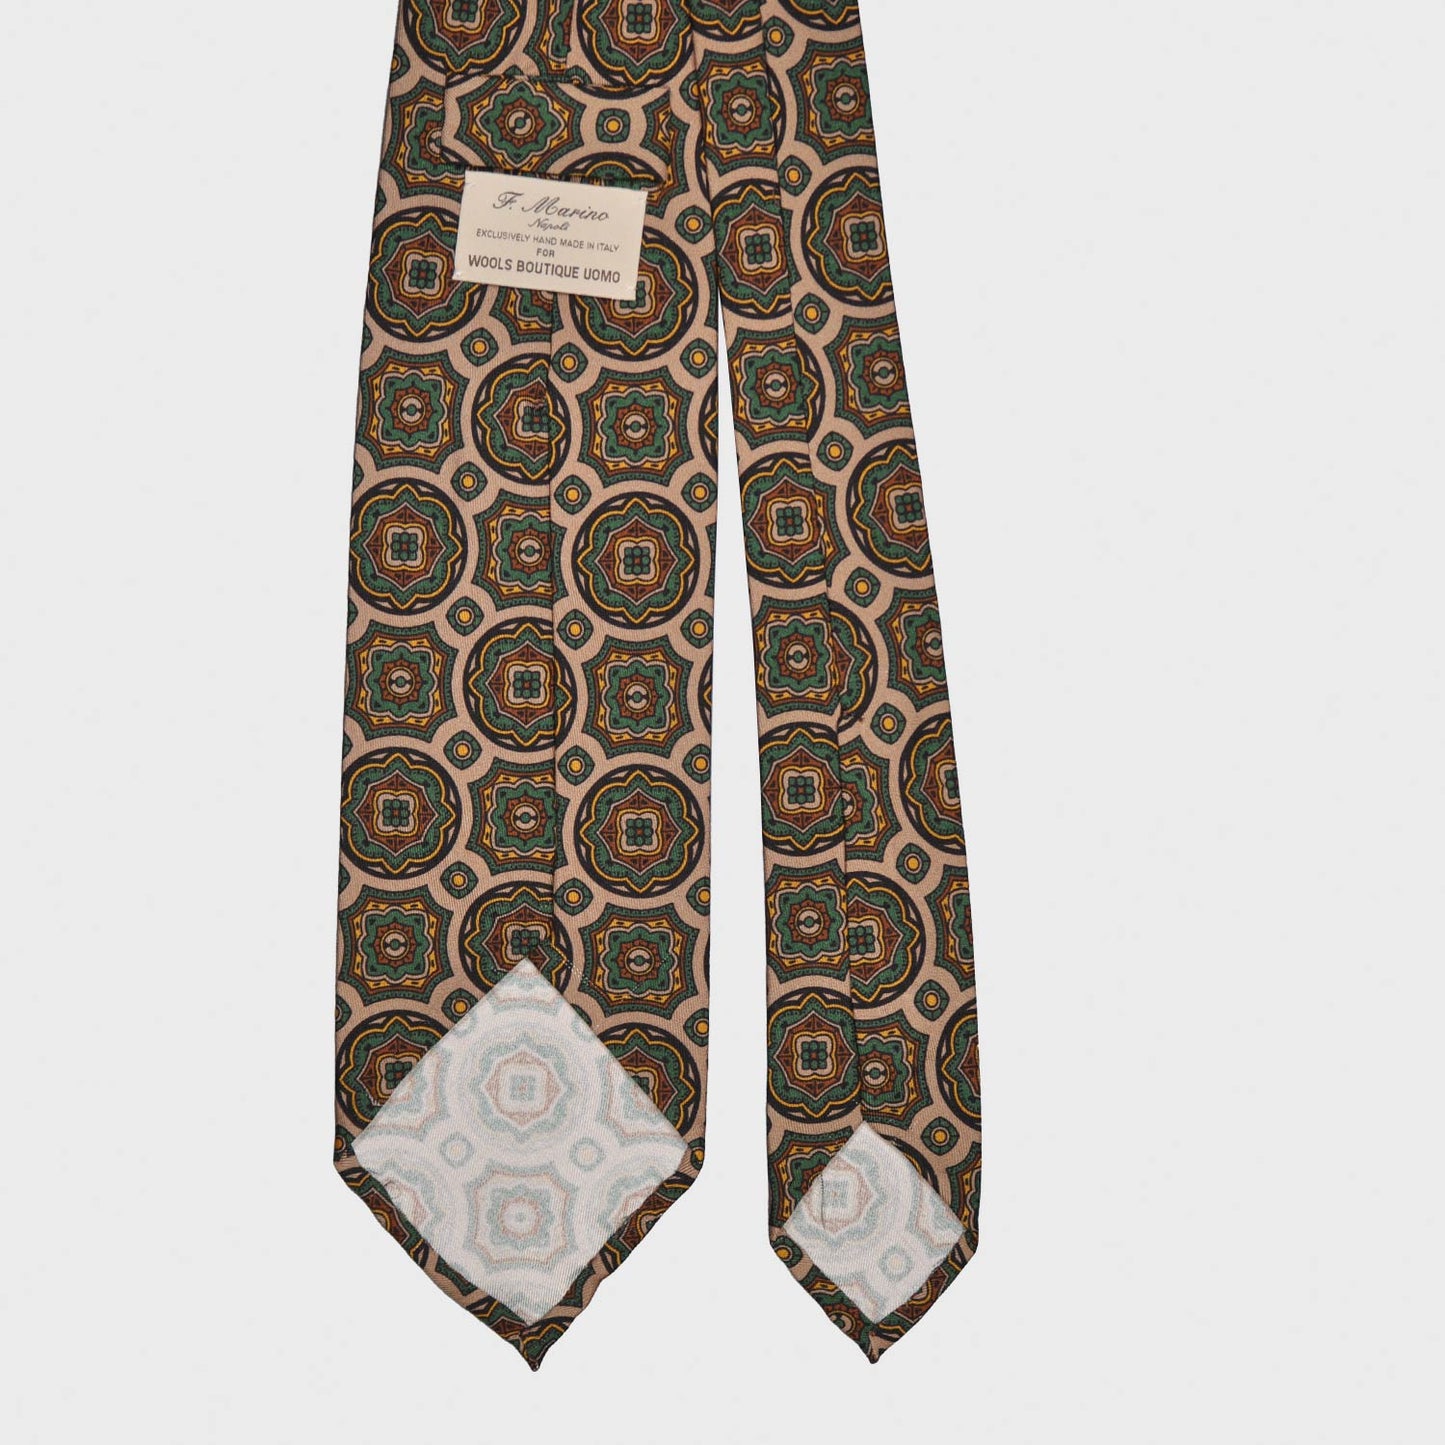 F.Marino Silk Tie 3 Folds Mandala Sand Beige-Wools Boutique Uomo